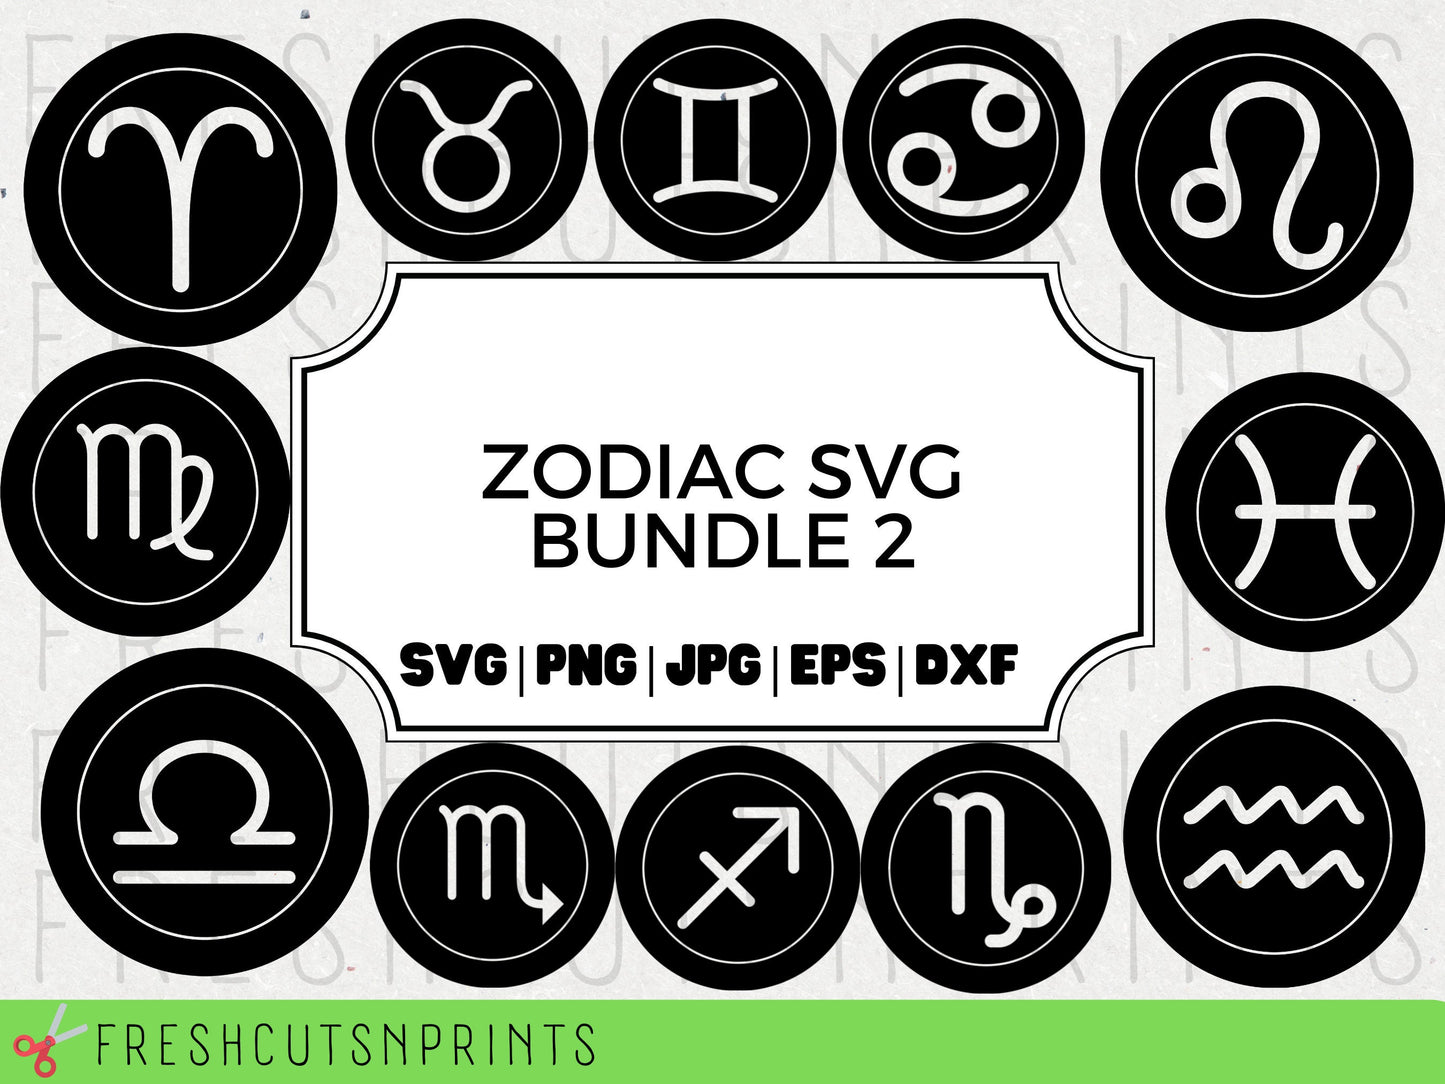 Zodiac SVG Bundle 2, Zodiac Signs, svg, Zodiac Constellations, Aries, Leo, Taurus, Virgo, Gemini, Libra, Cancer, Scorpio, Pisces, Aquarius